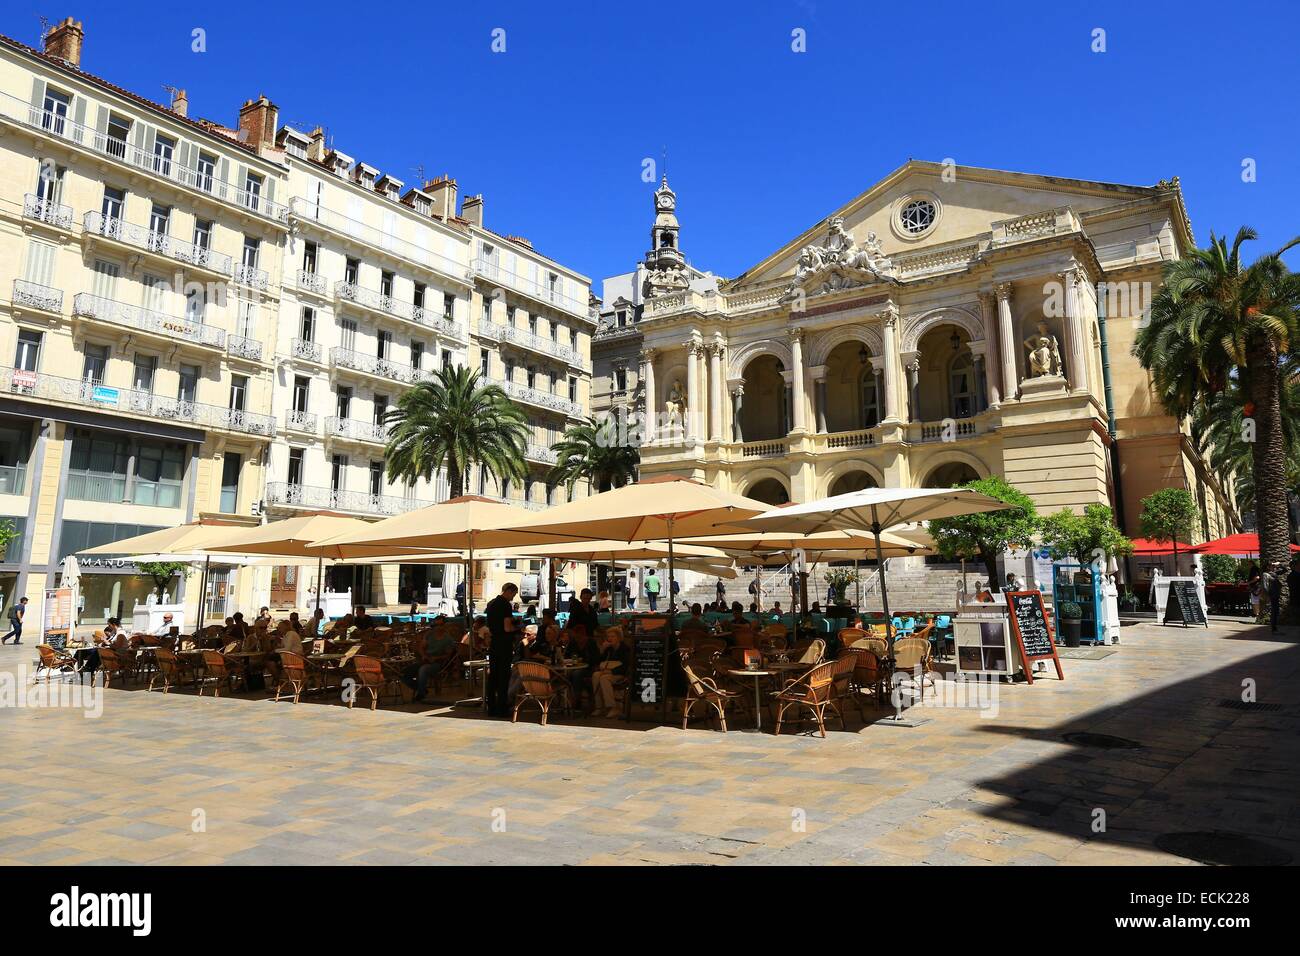 France, Var, Toulon, Place Victor Hugo, Opera Stock Photo